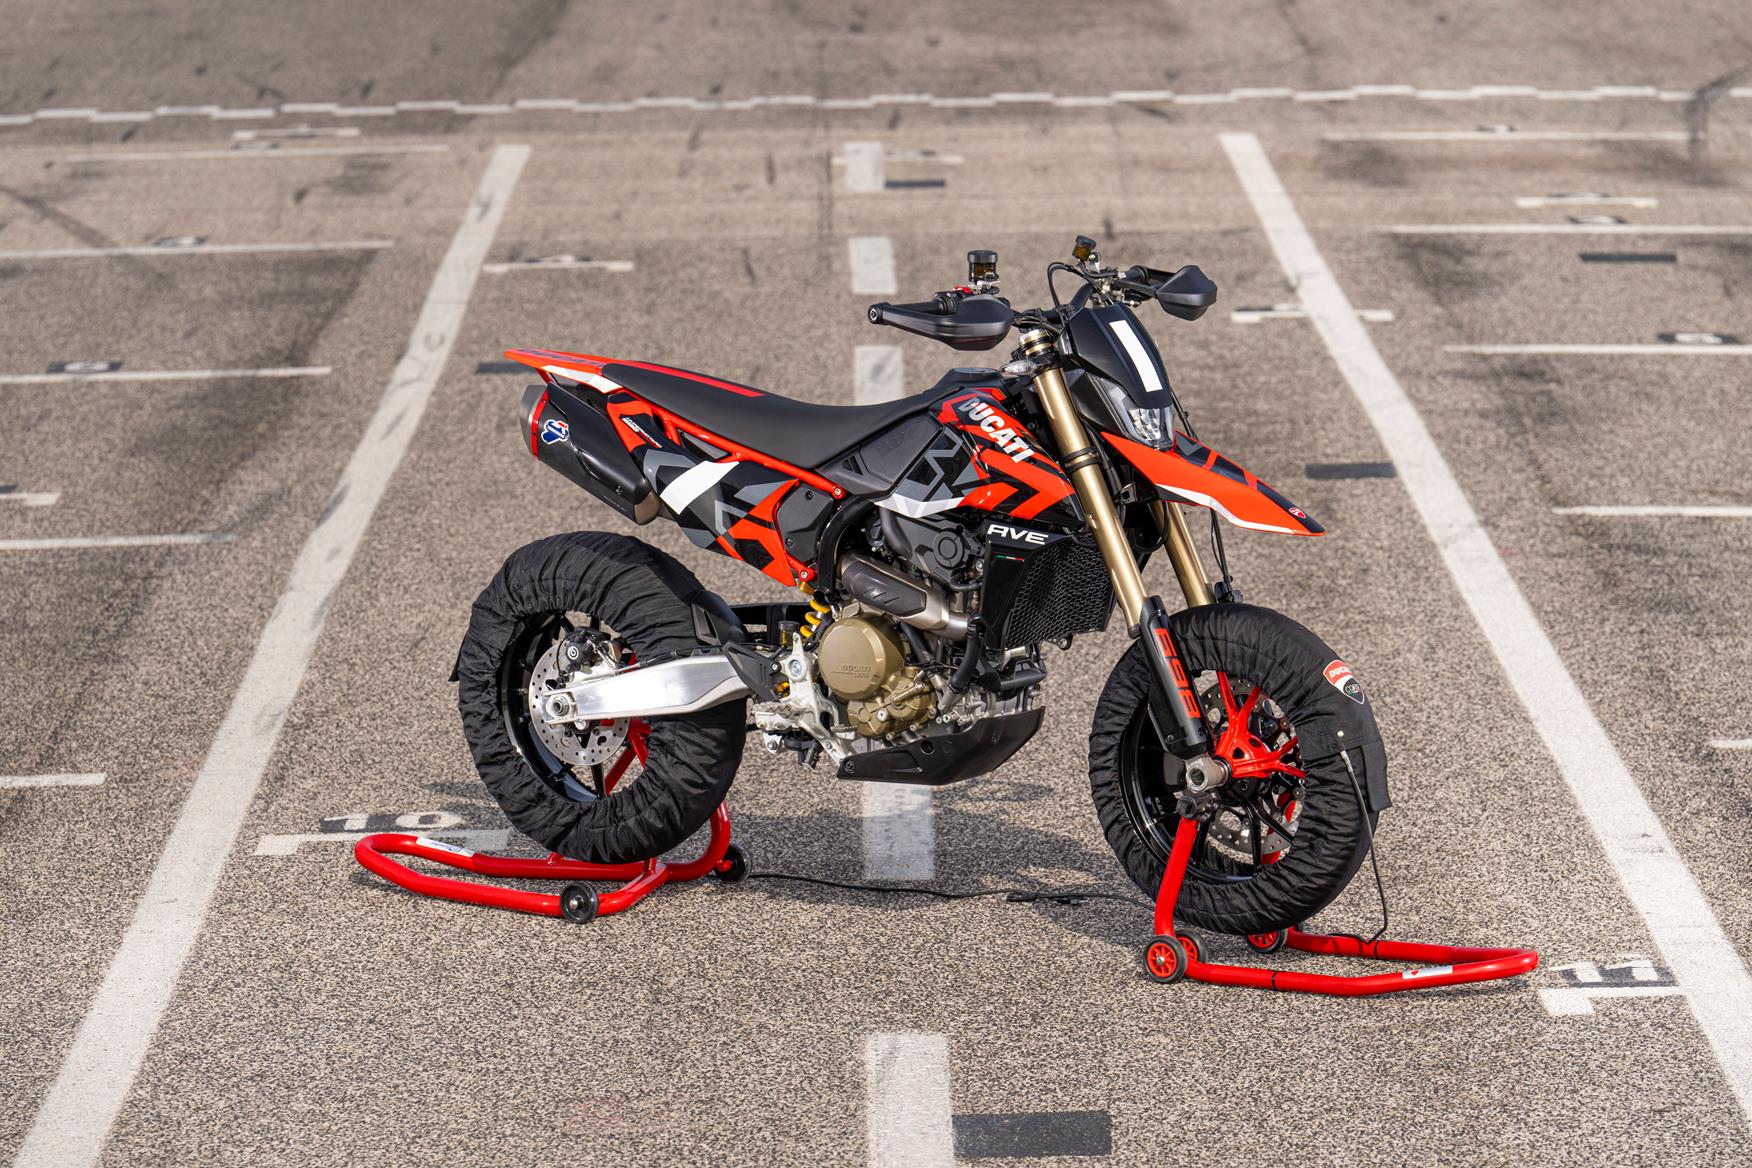 Singles club Ducati reveals Hypermotard 698 Mono